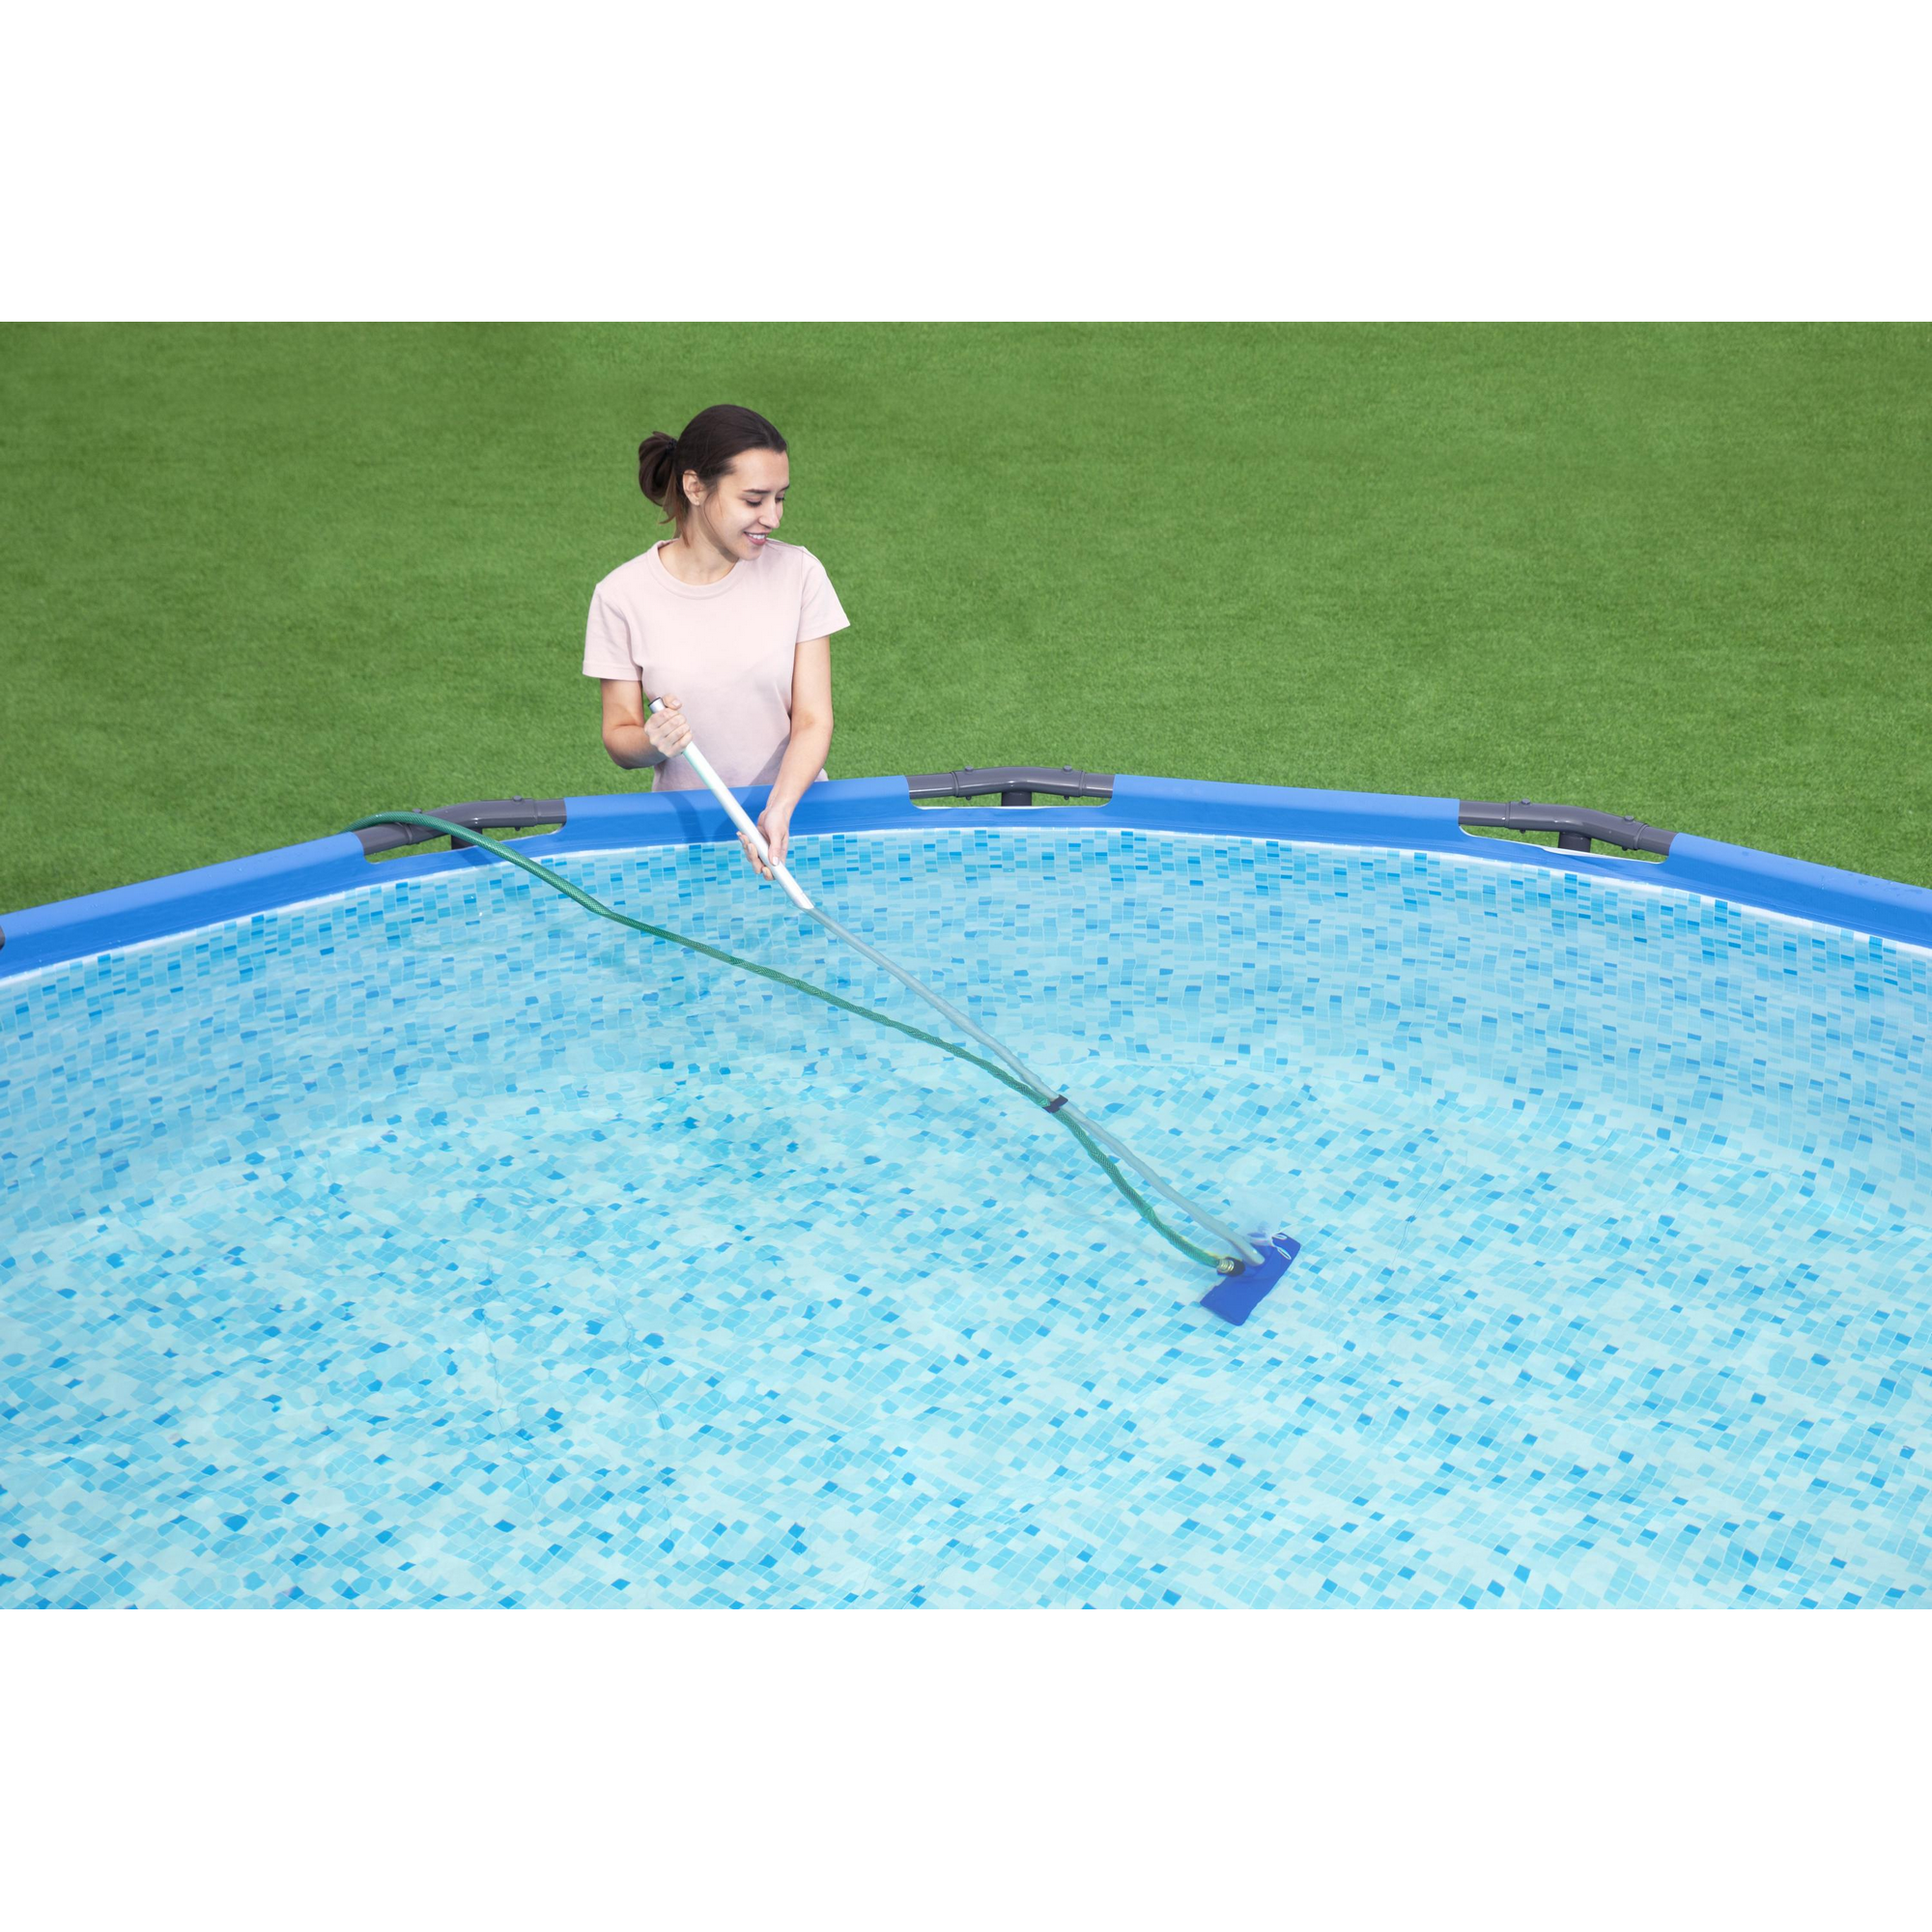 Poolpflege Komplett-Set 'Flowclear' 7-teilig für Poolgrößen bis 396 cm + product picture